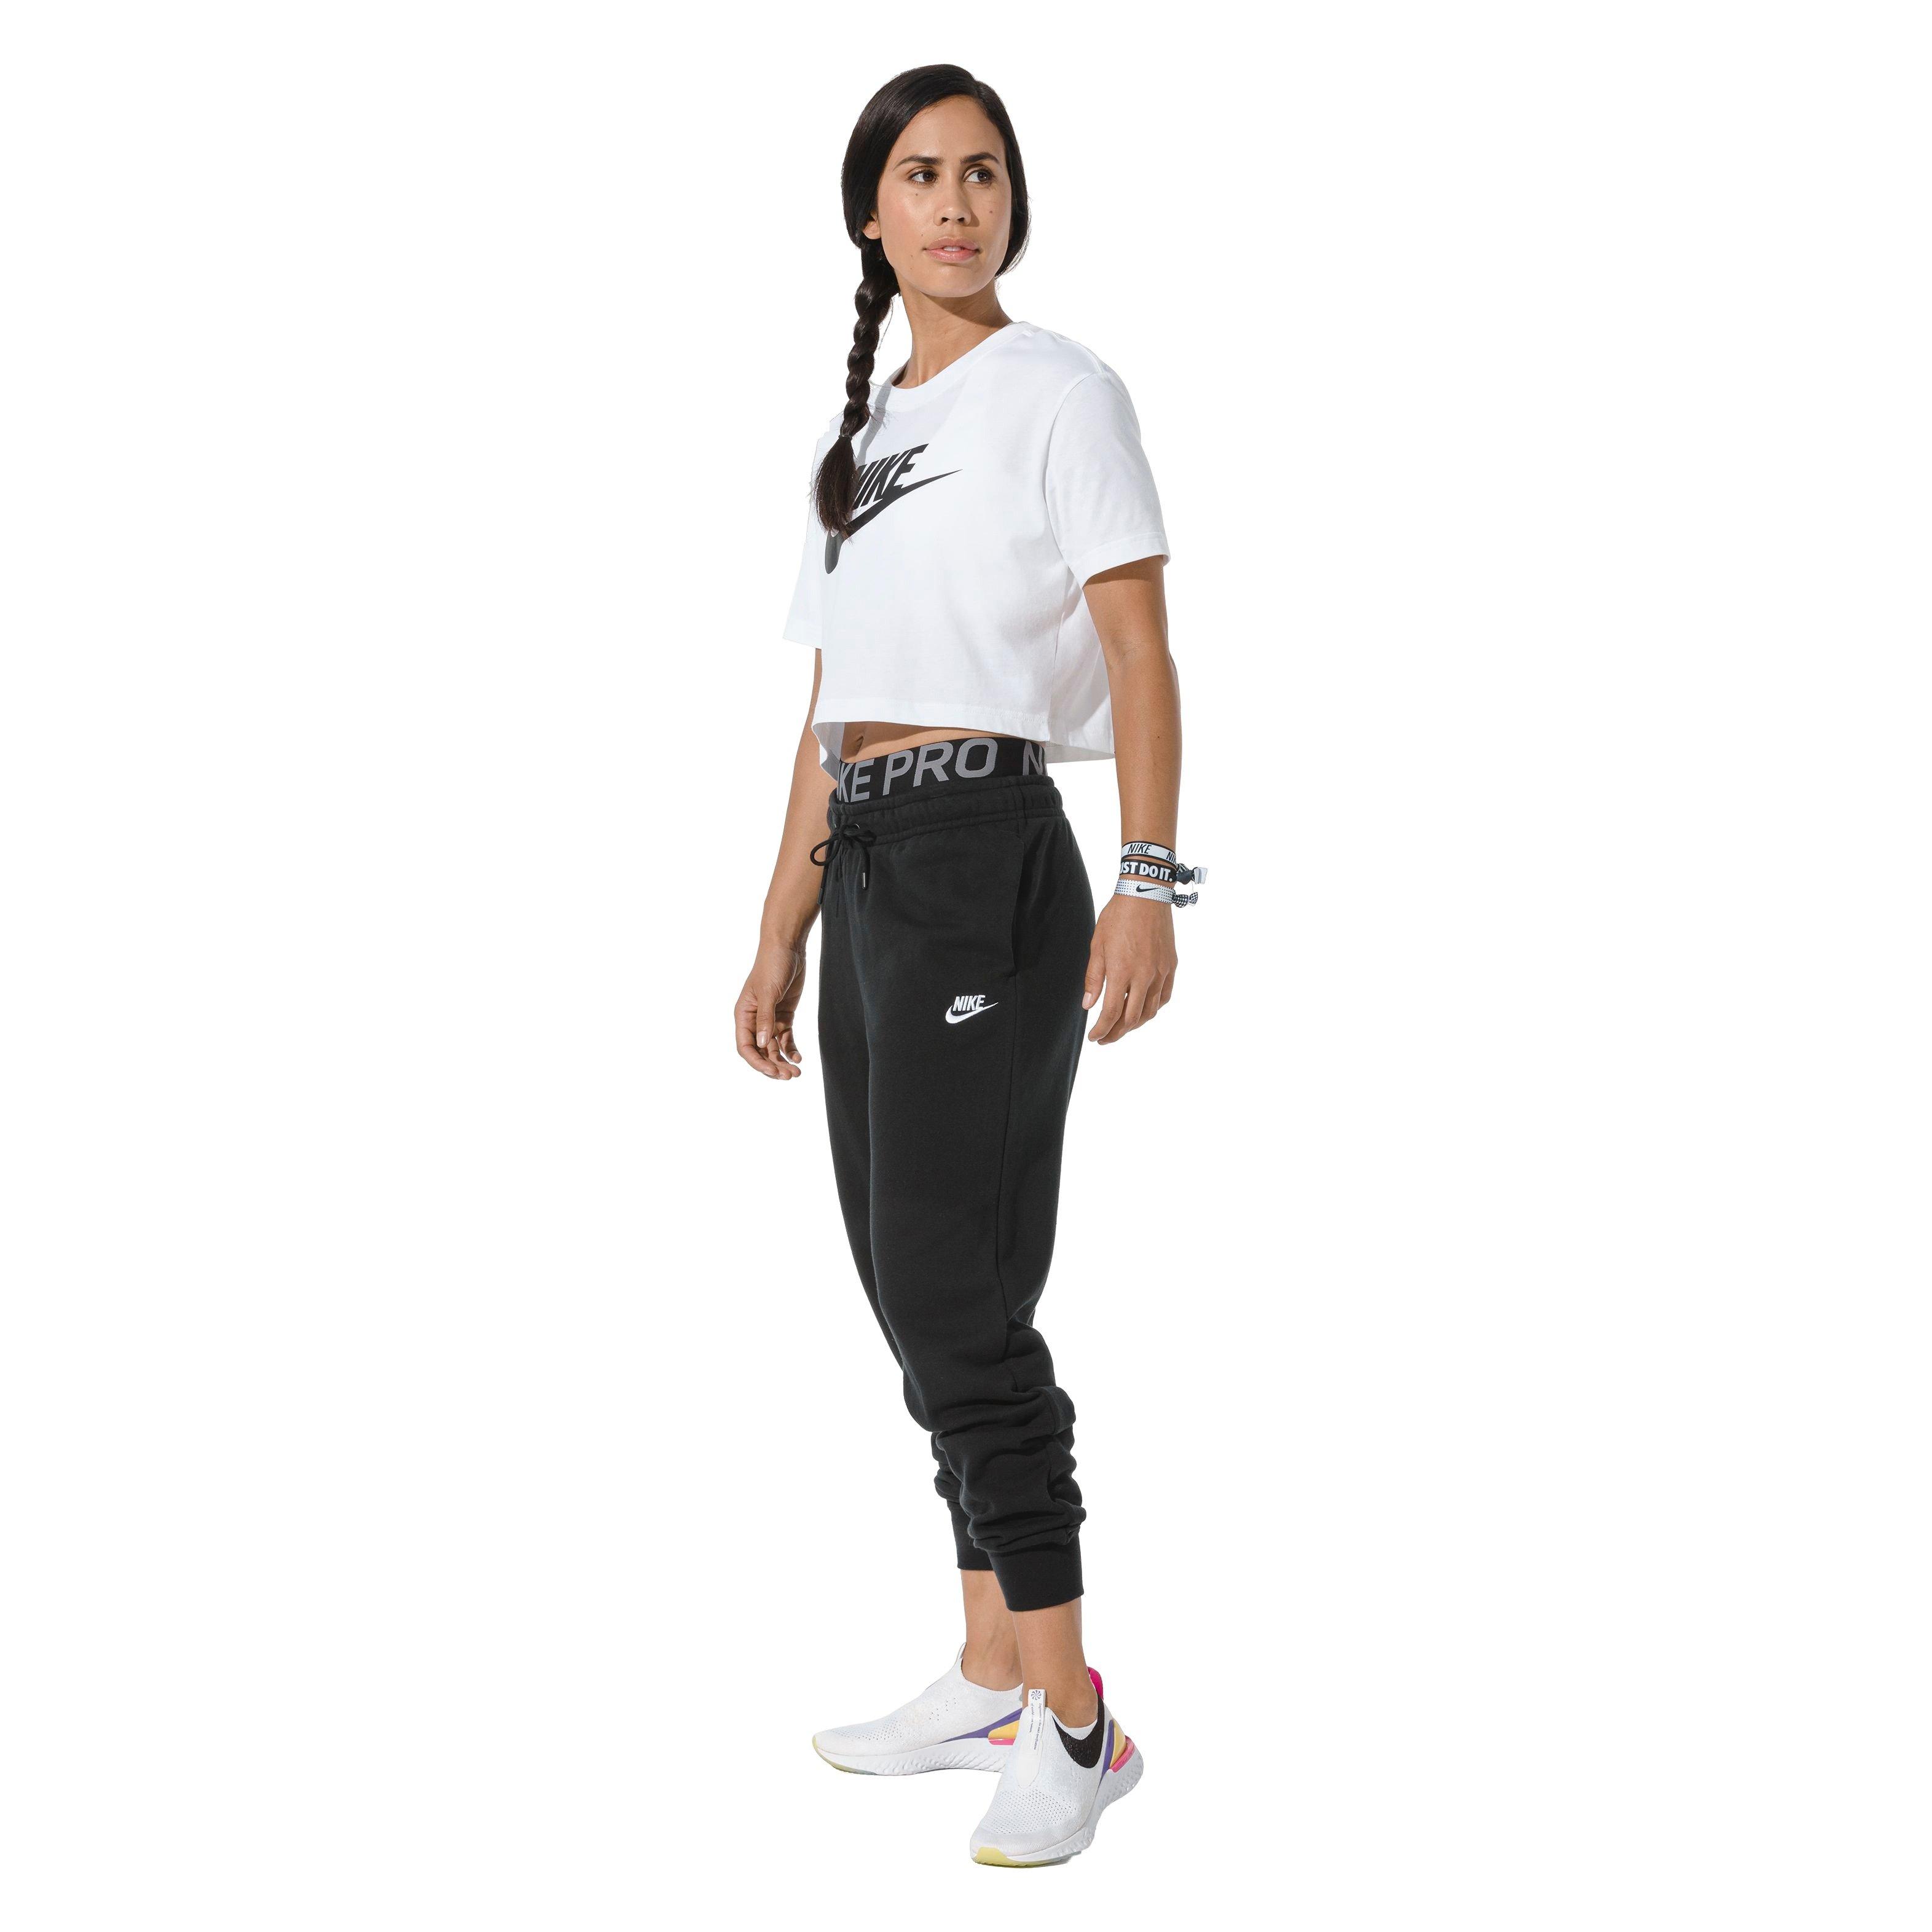 Fjord Raak verstrikt Clip vlinder Nike Women's Sportswear Essential Cropped T-Shirt - White